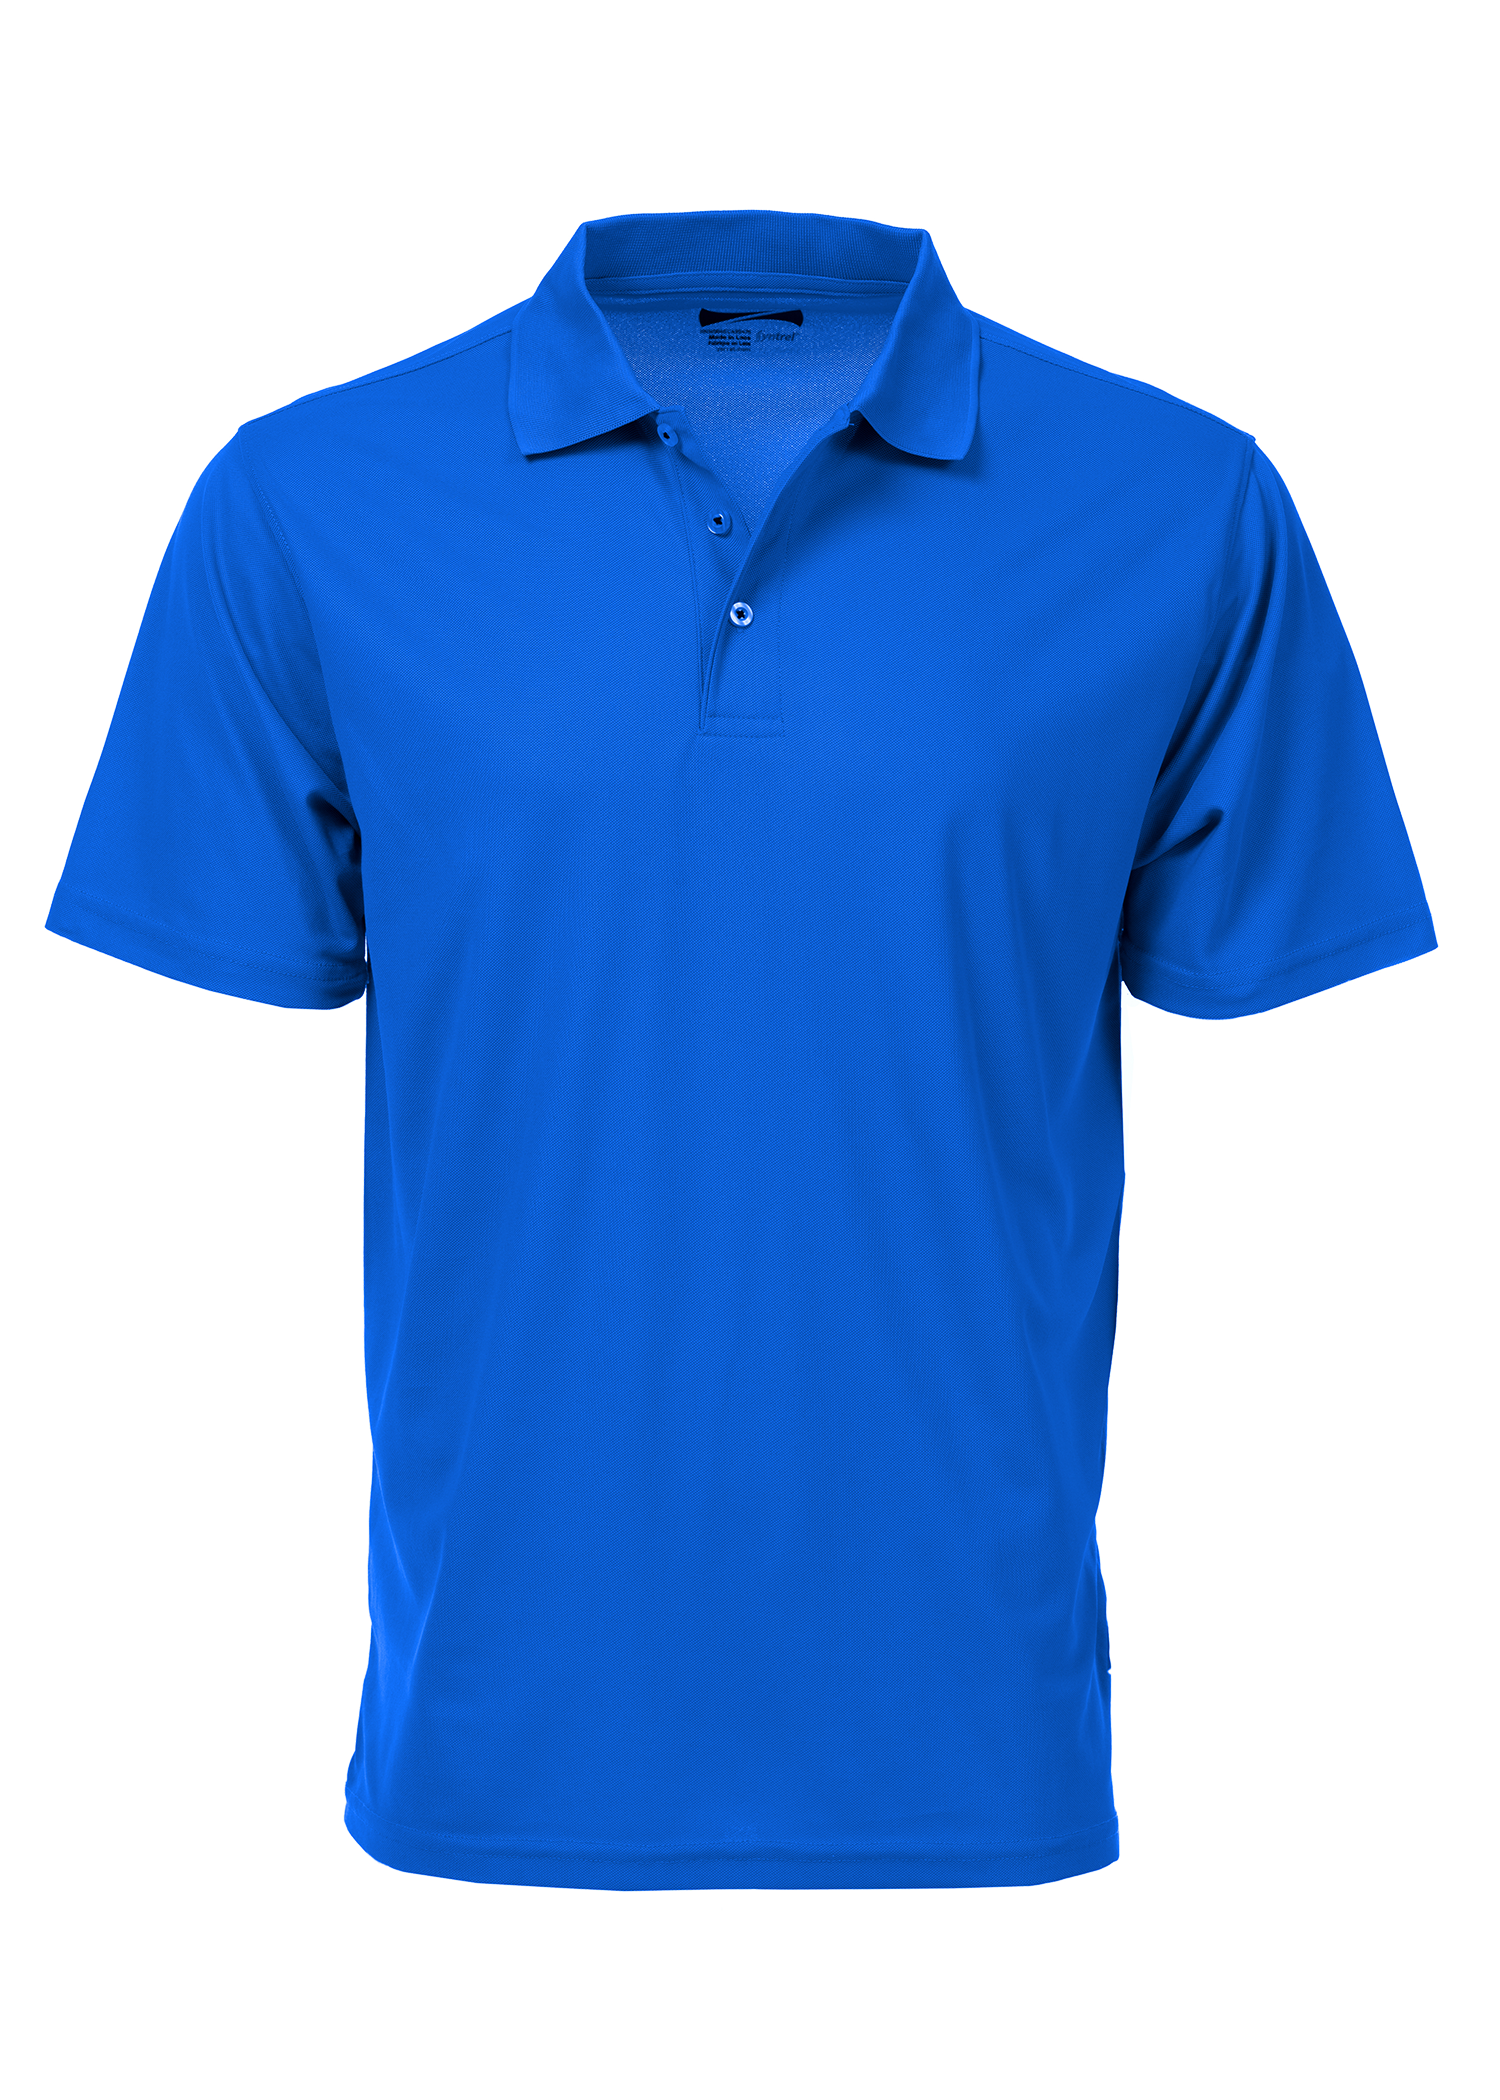 Zorrel Z4032 - Men's Legacy Short Sleeve Cool Max Golf Polo